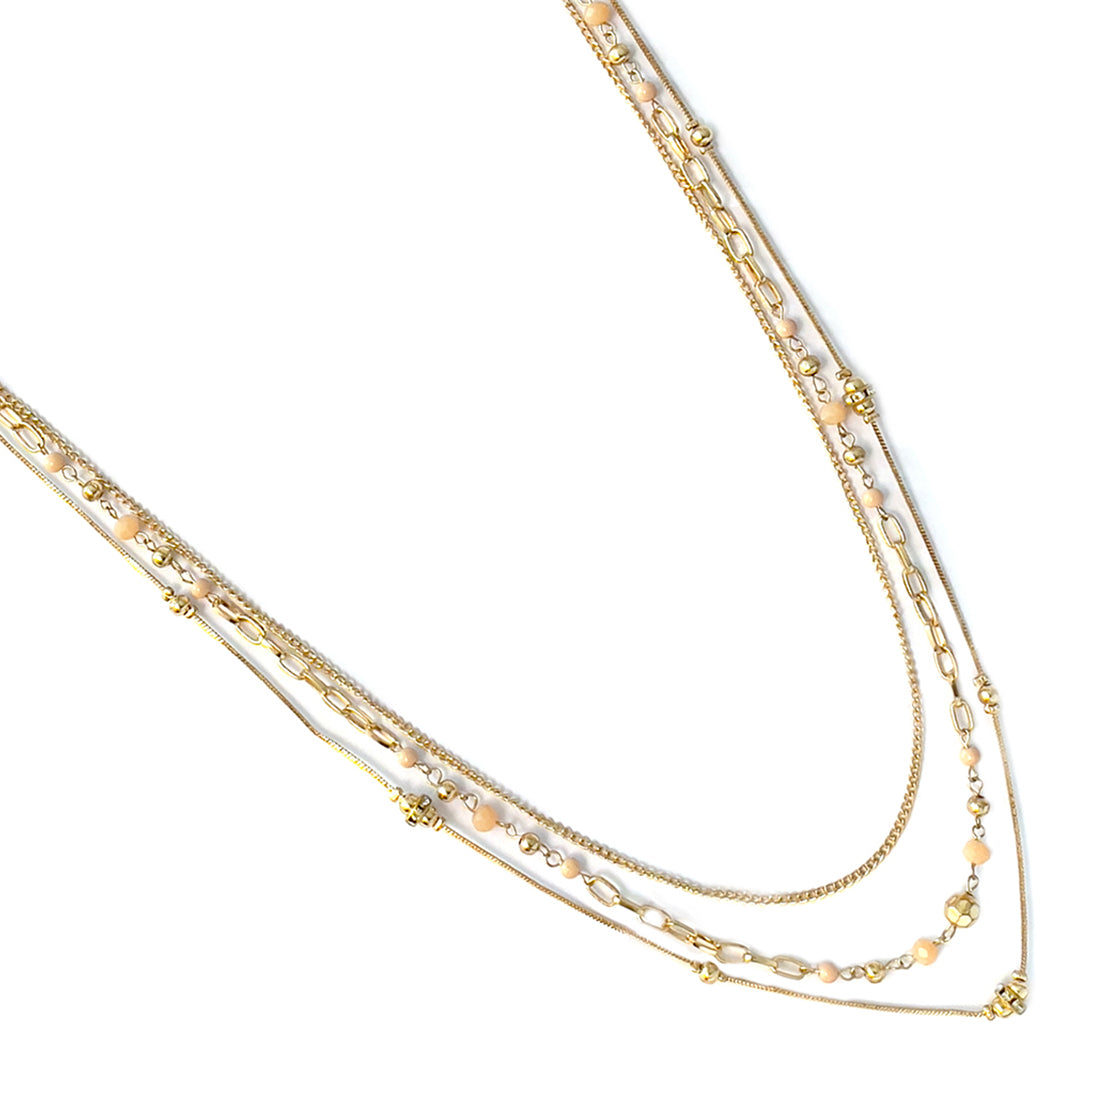 Beaded Gold-Toned Triple Layered Long Boho Necklace